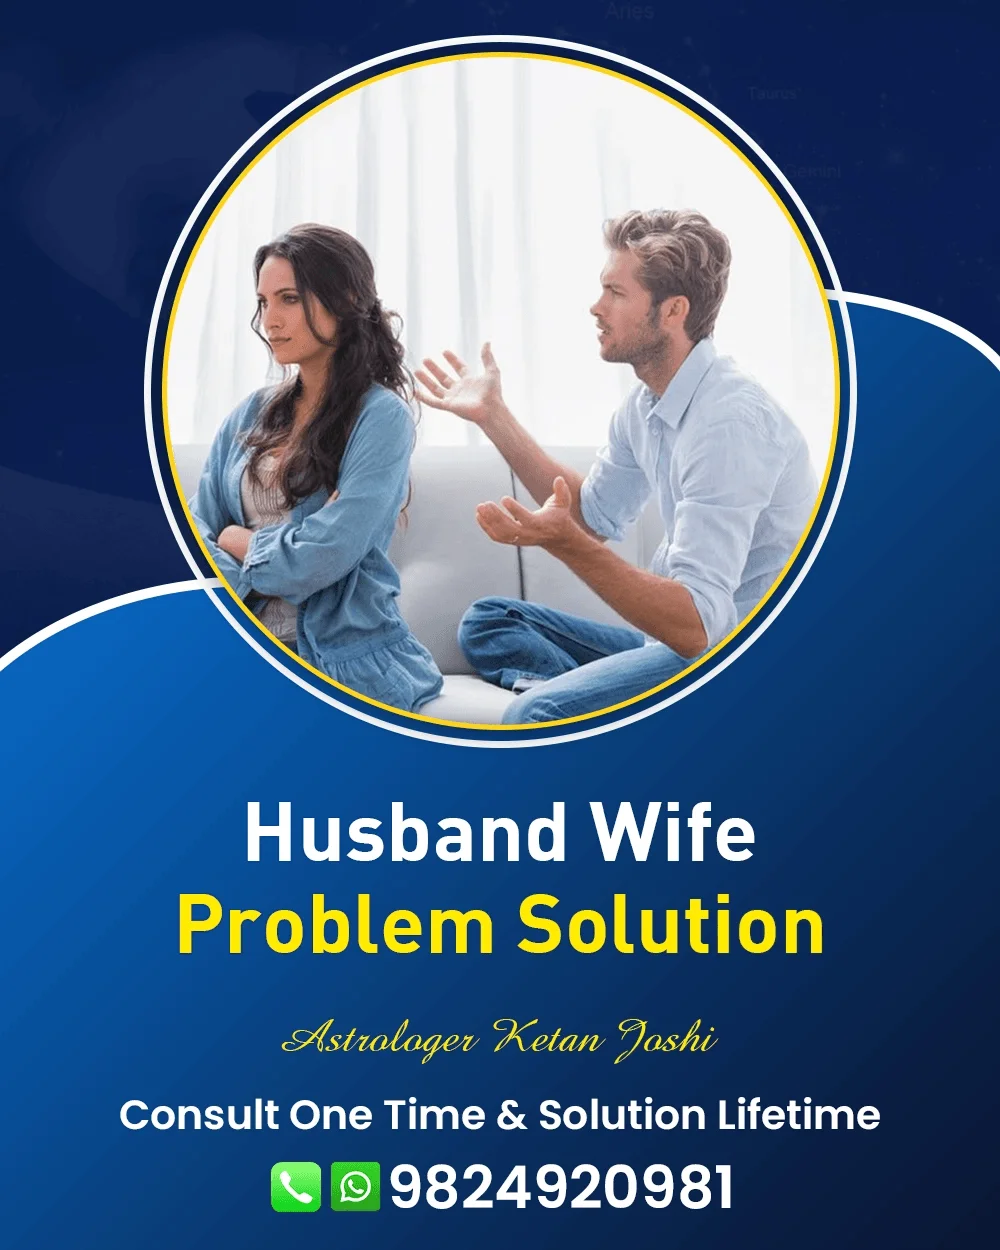 Husband Wife Problem Solution Astrologer In Malia